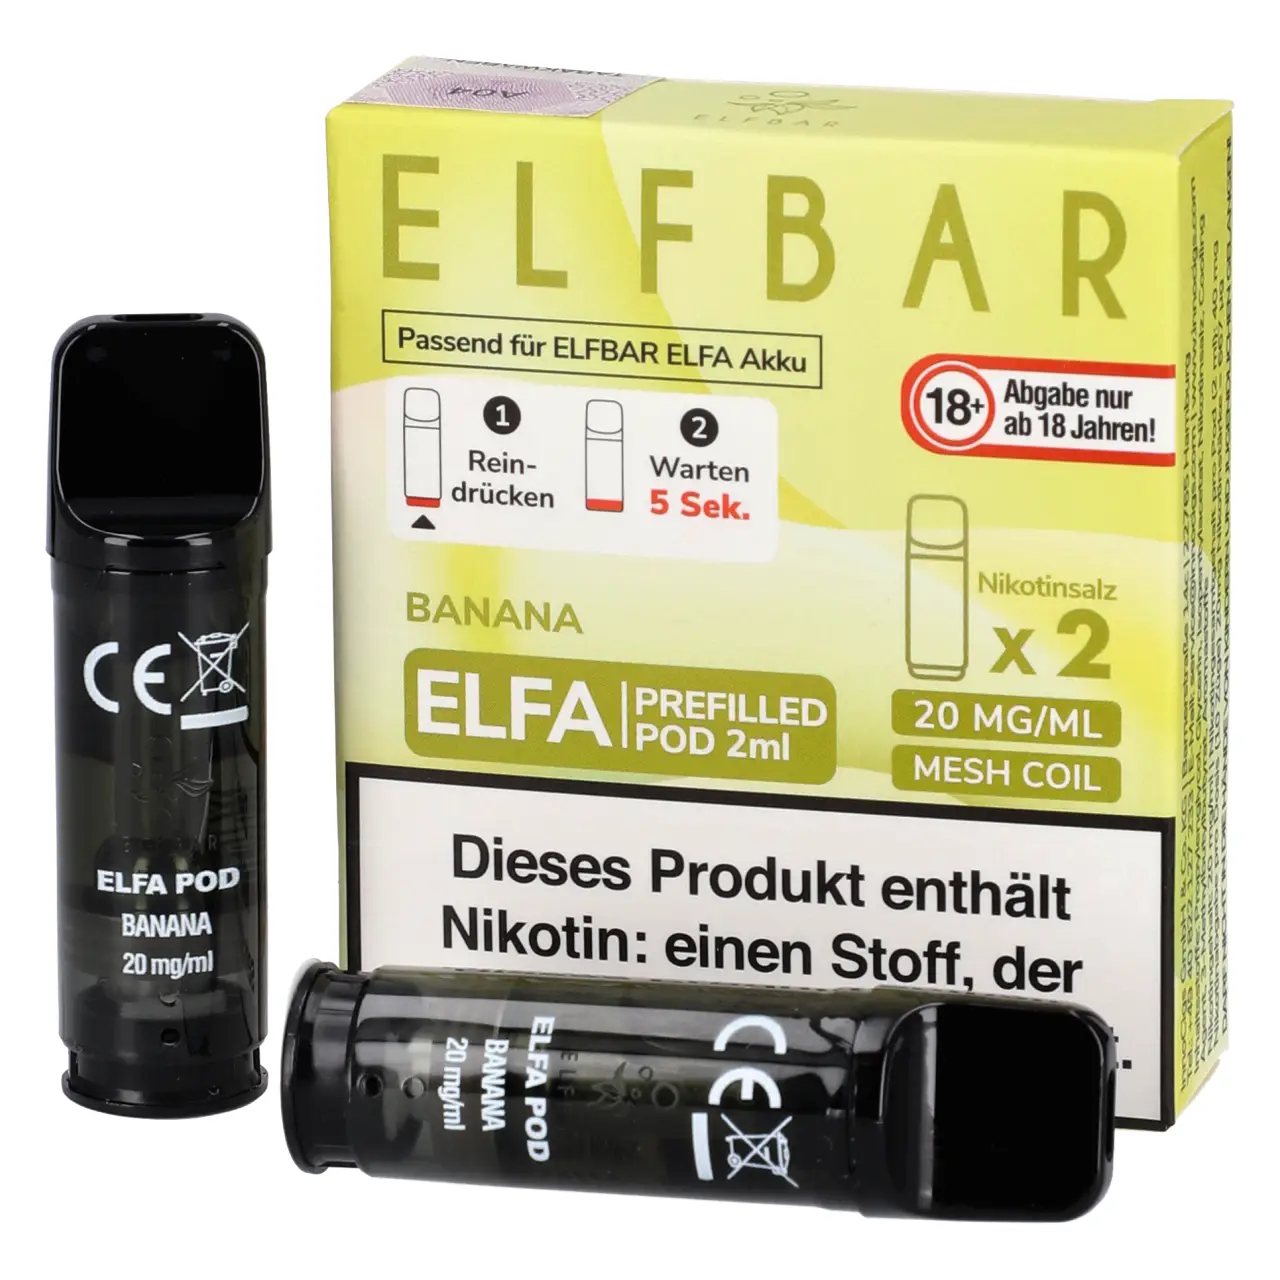 Banana - Elf Bar ELFA Prefilled POD für Mehrweg Vape - befüllt mit 2ml Liquid - 2er Packung